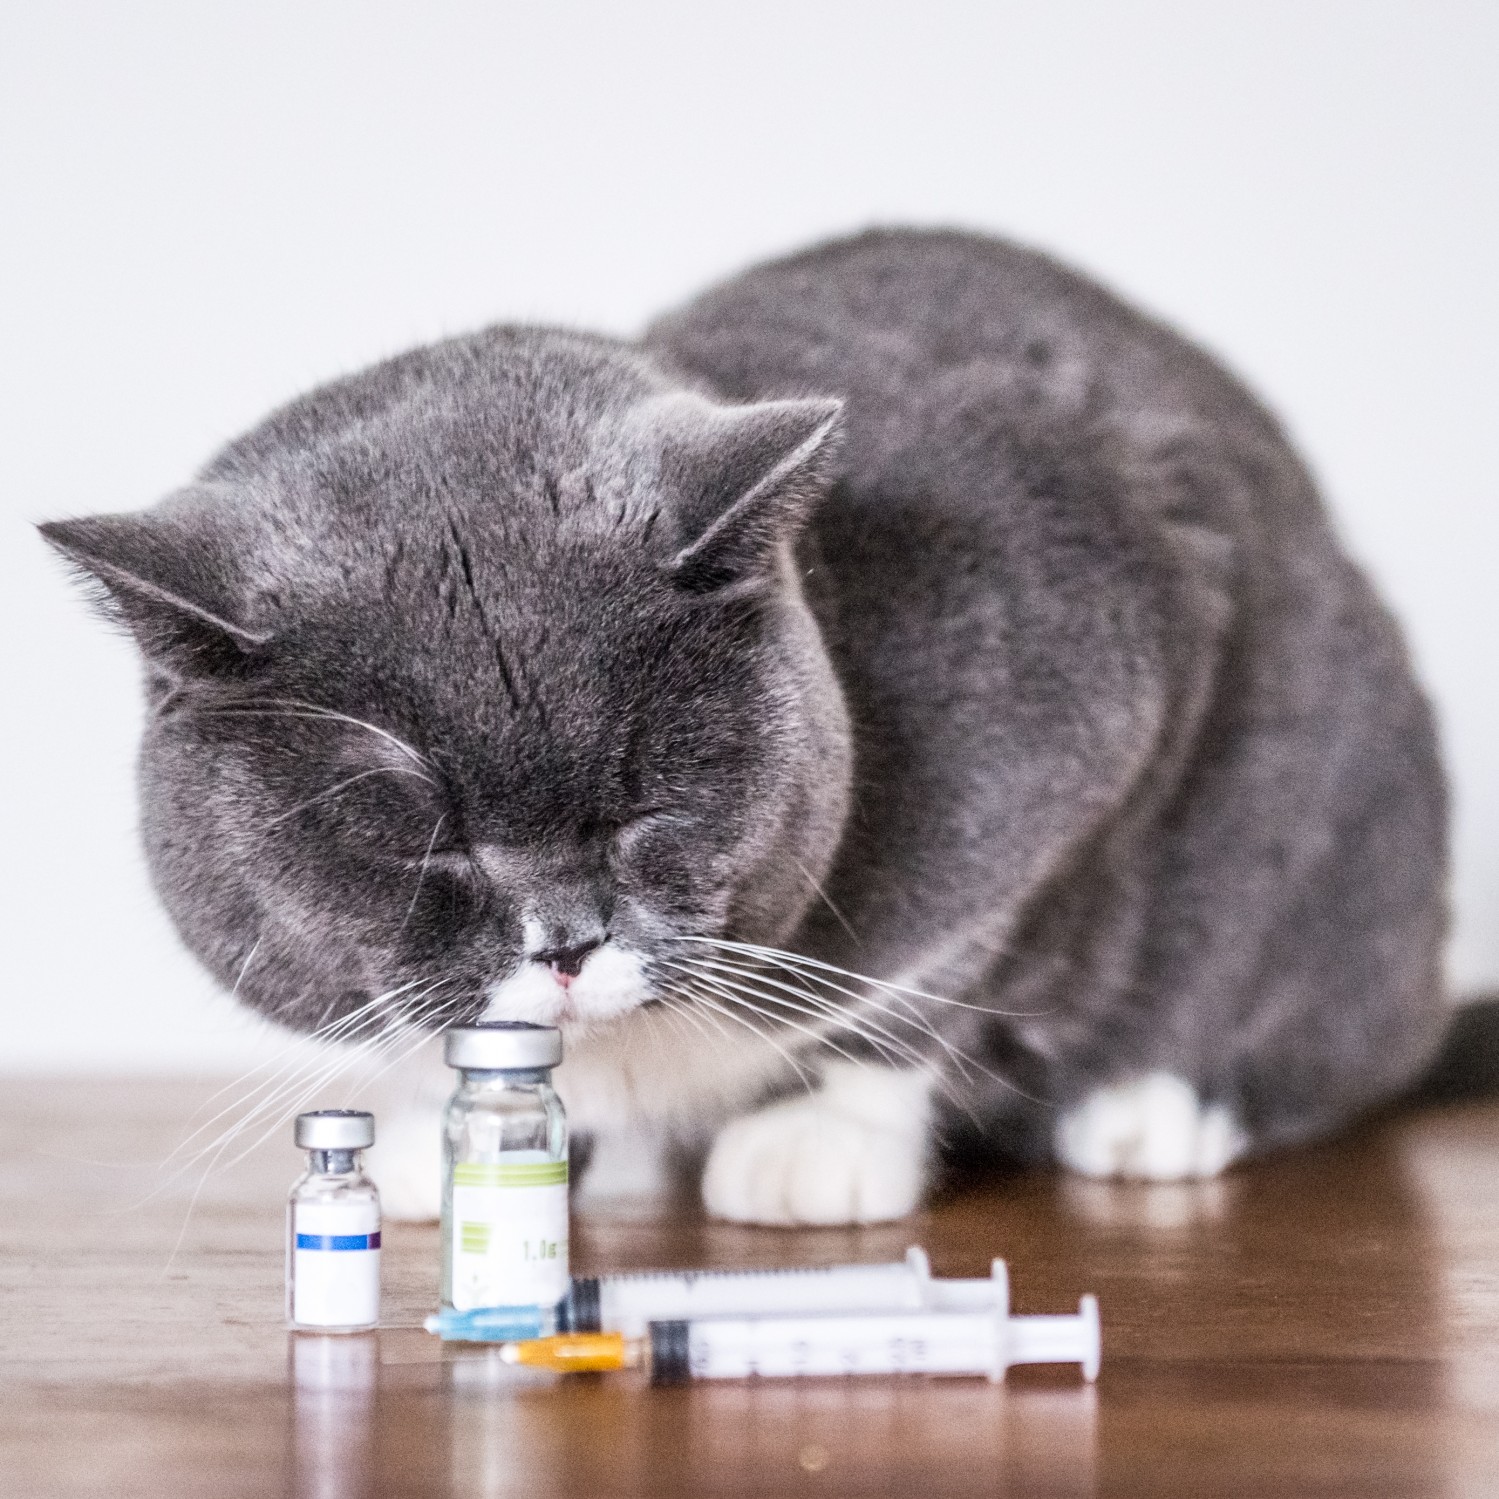 Cat Looking at Medicine - Preventative Care